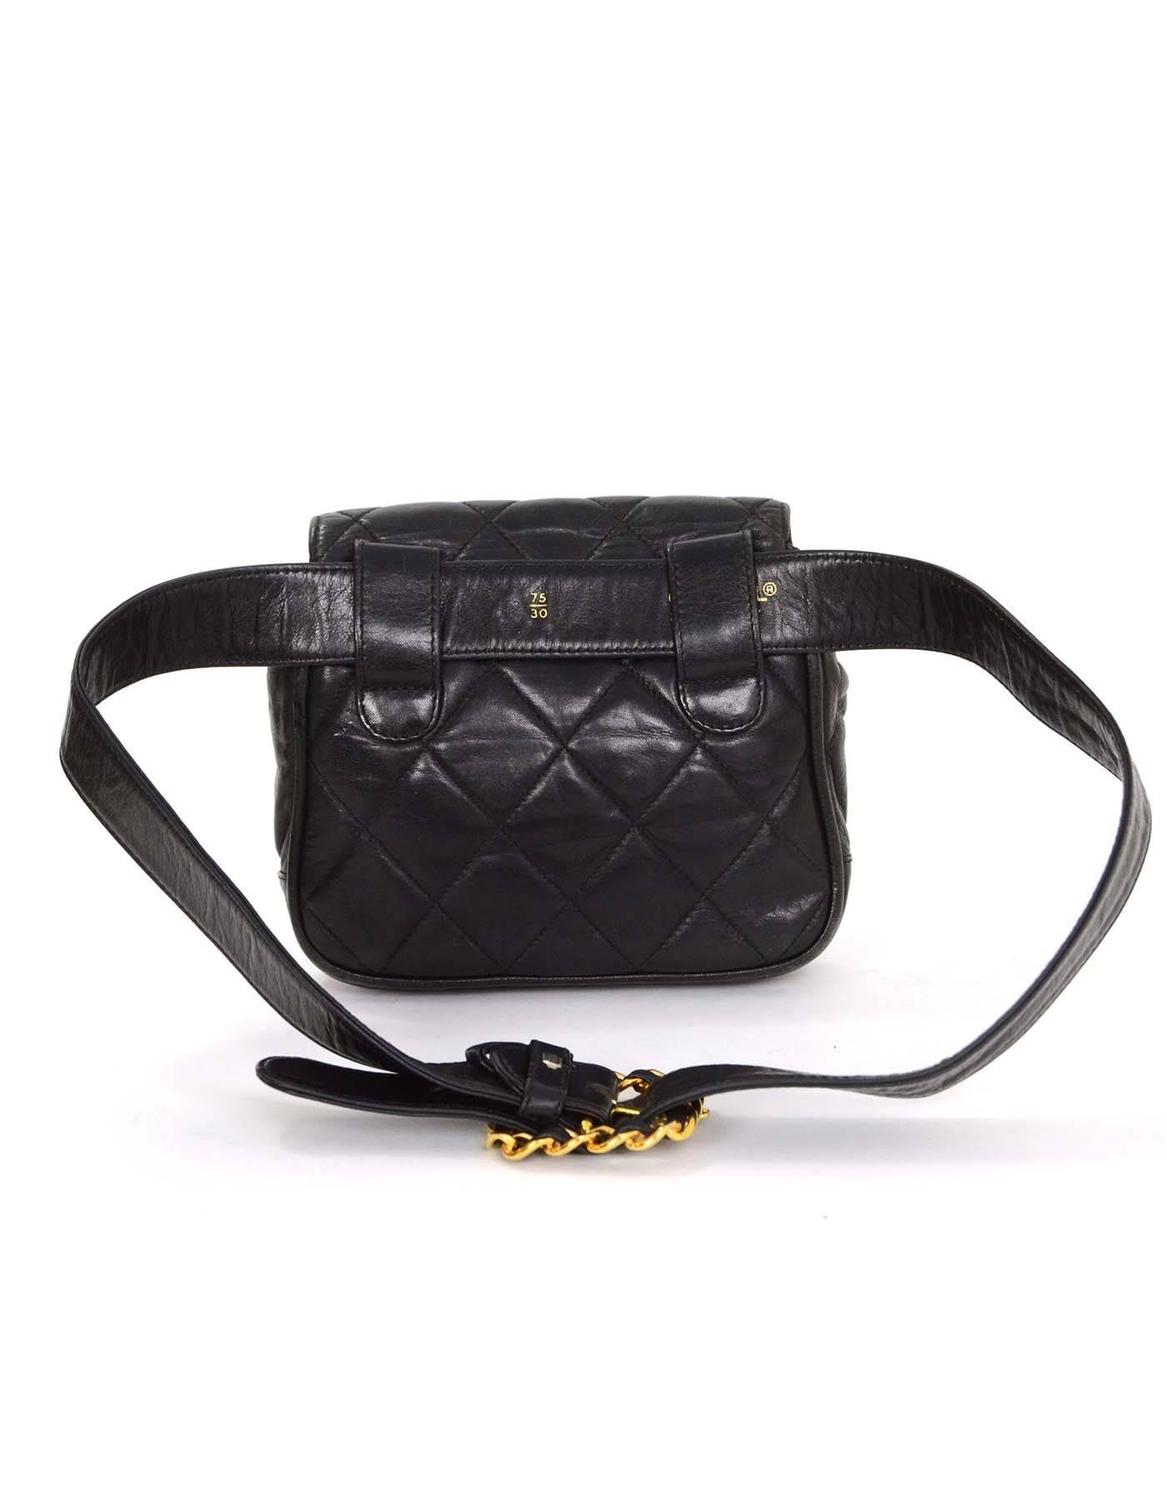 Chanel Black Quilted Flap Belt Bag sz 75 GHW For Sale at 1stdibs